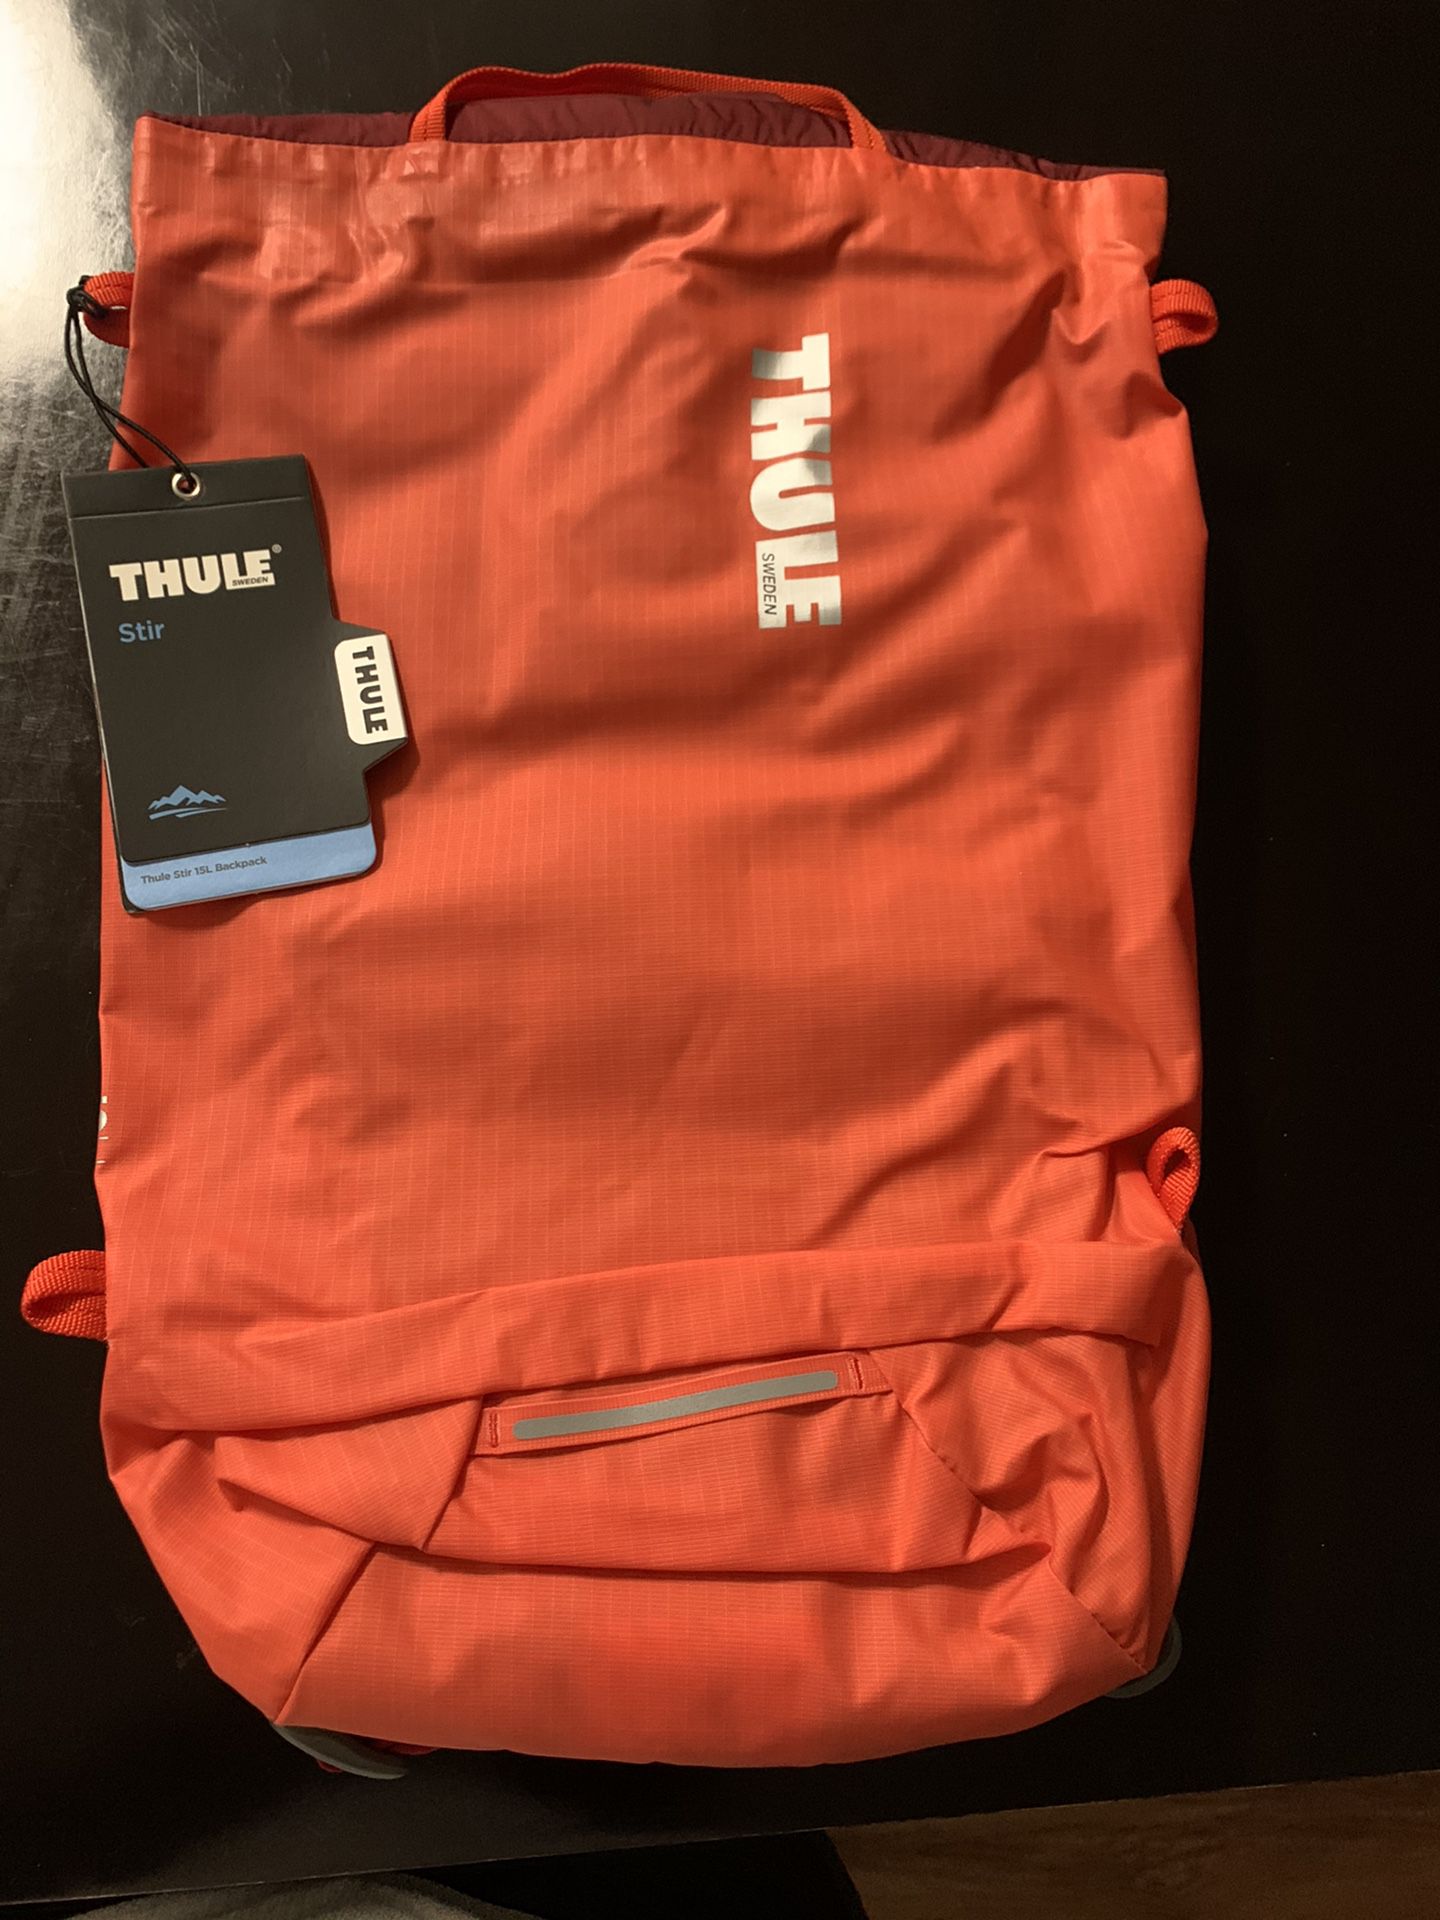 Thule Stir 15L backpack